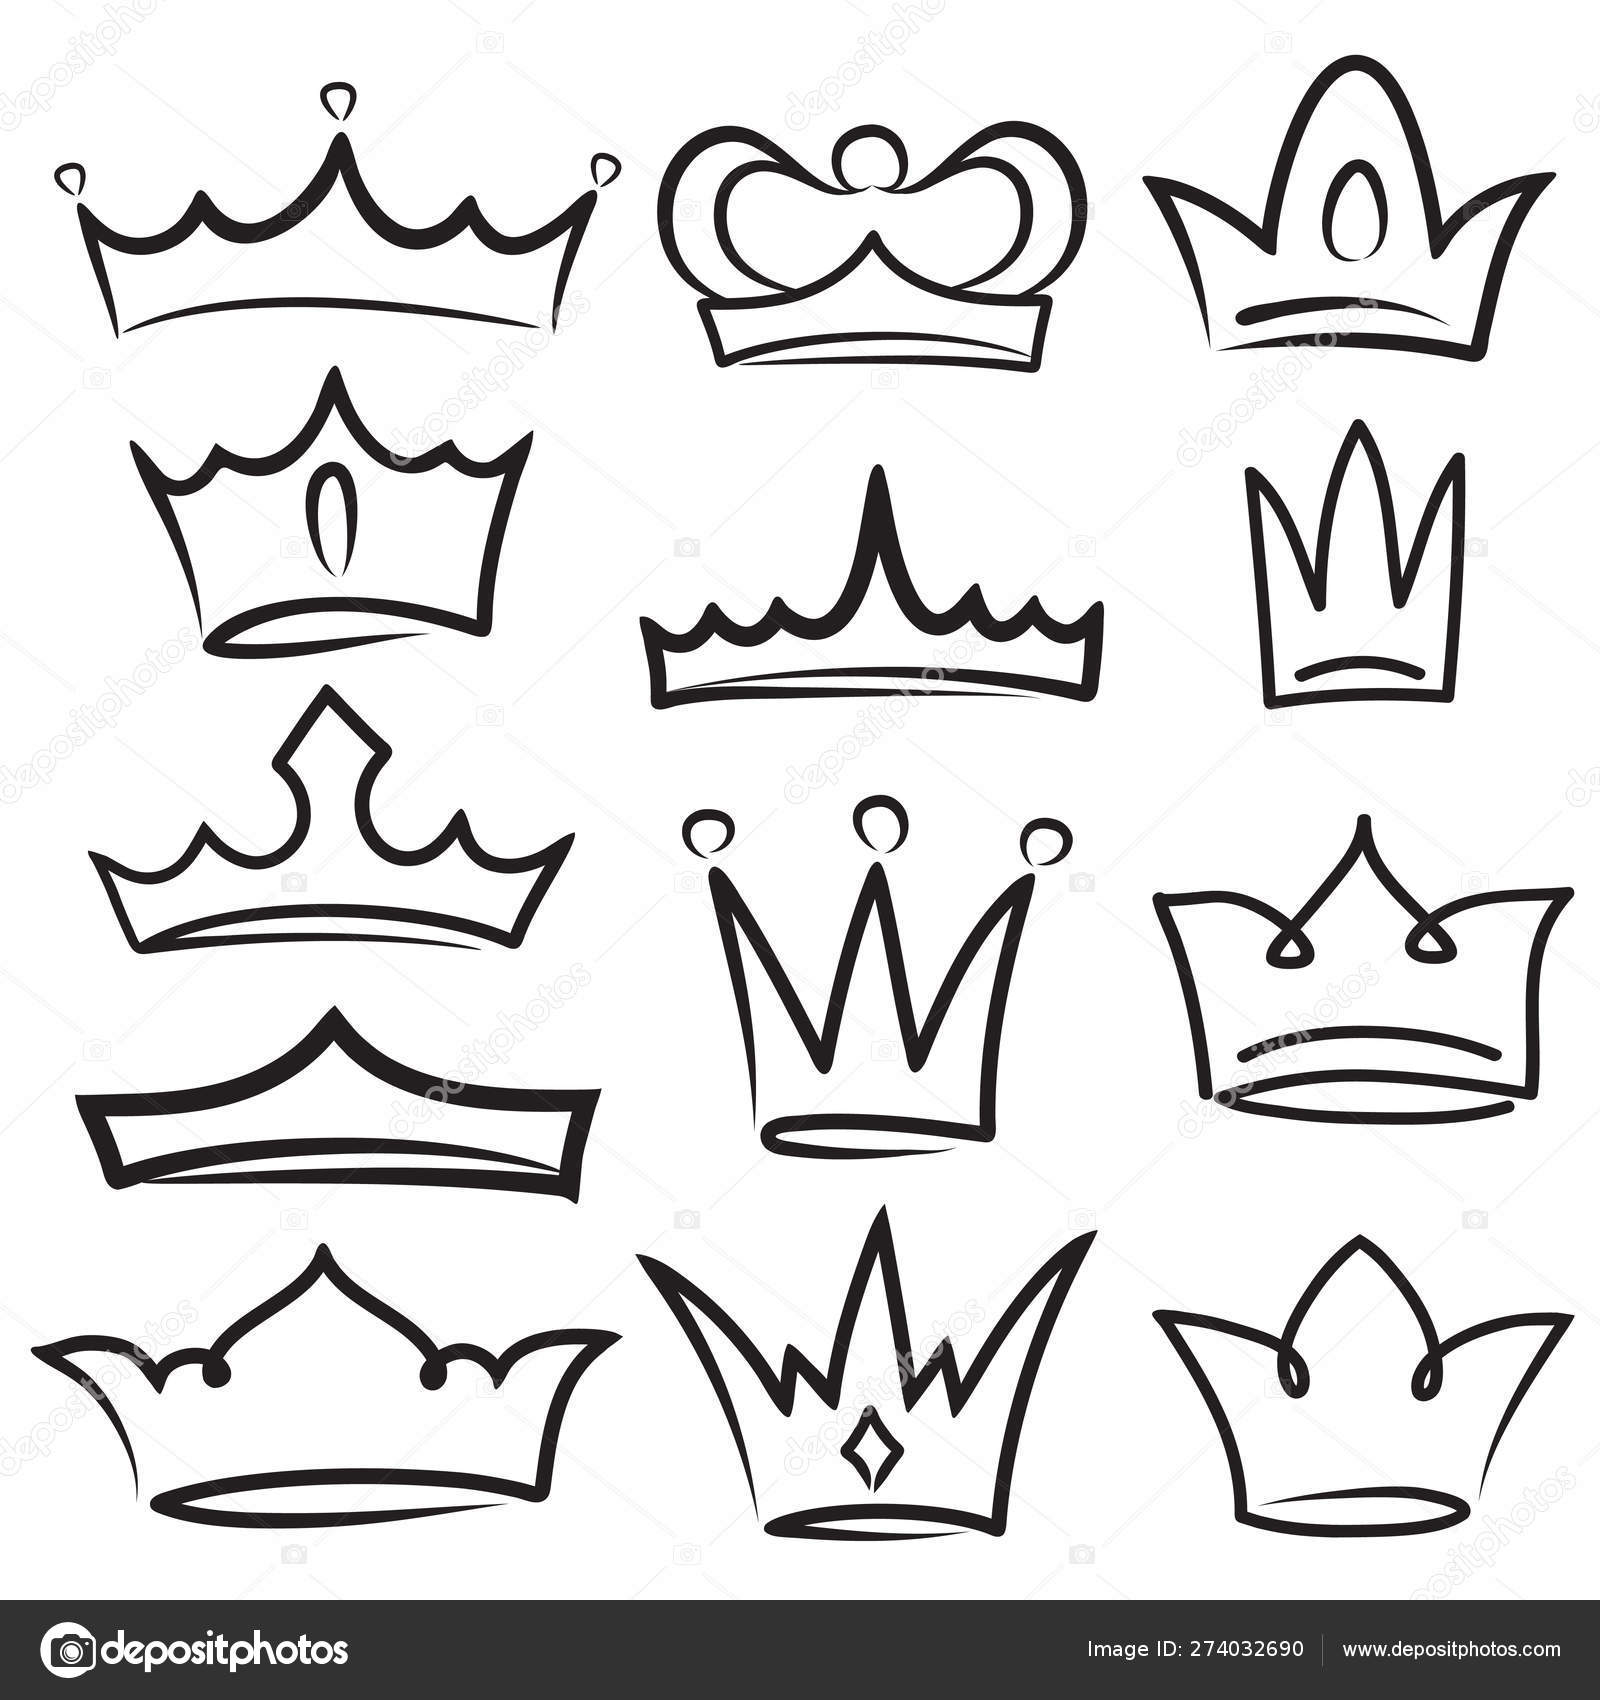 Sketch Crown Simple Graffiti Crowning Elegant Queen Or King Cr Stock Vector C Vovanivan 274032690